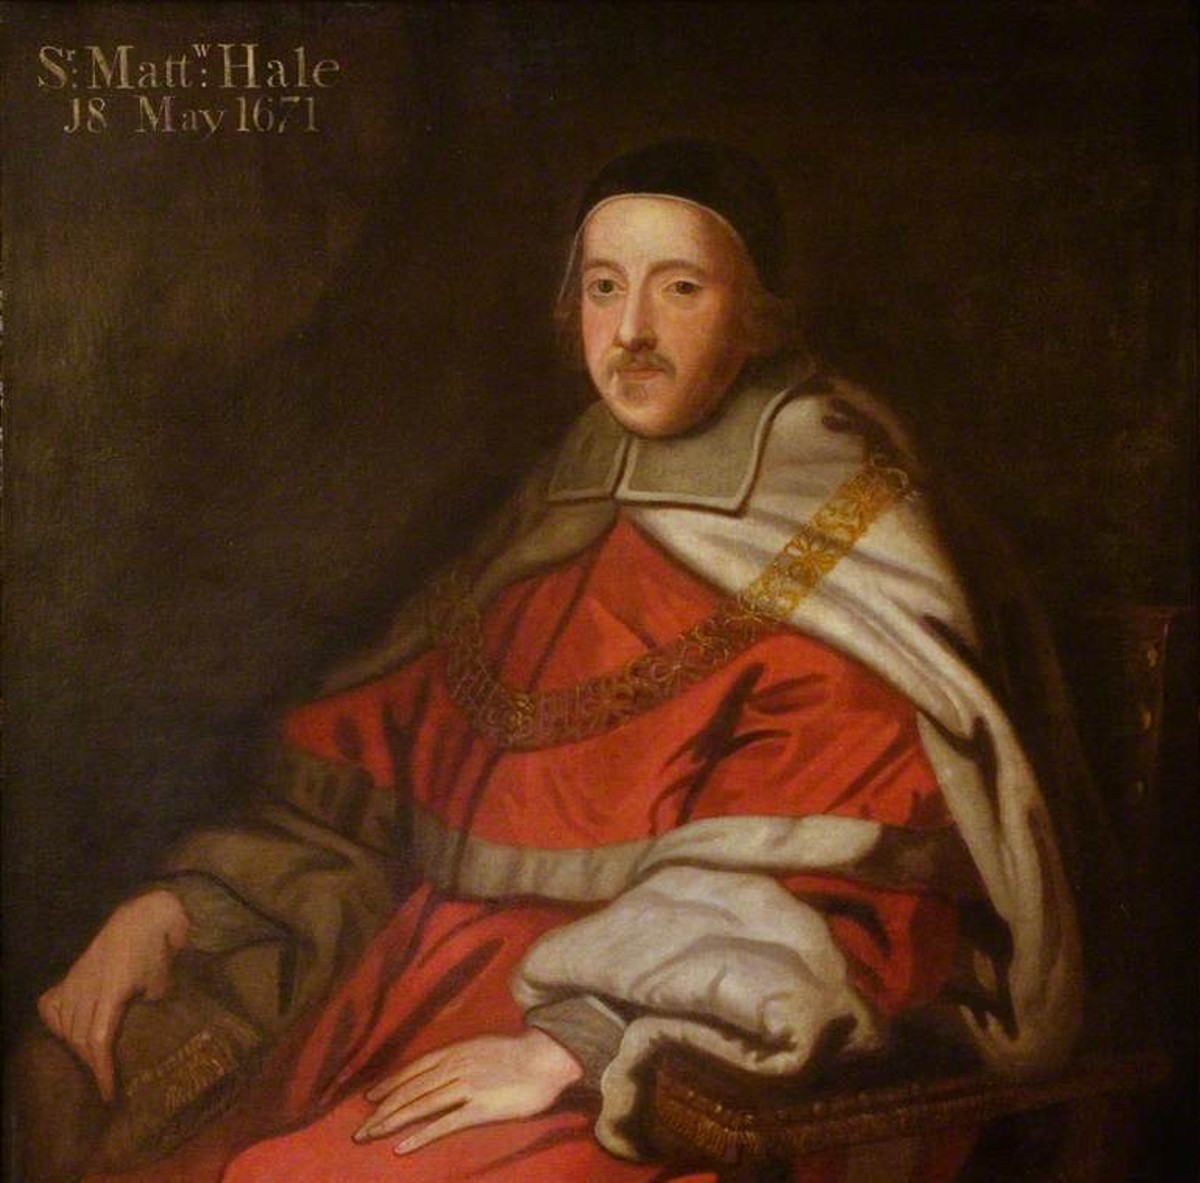 Portrait of Sir Matthew Hale, Lord Chief Justice (1671), John Michael Wright